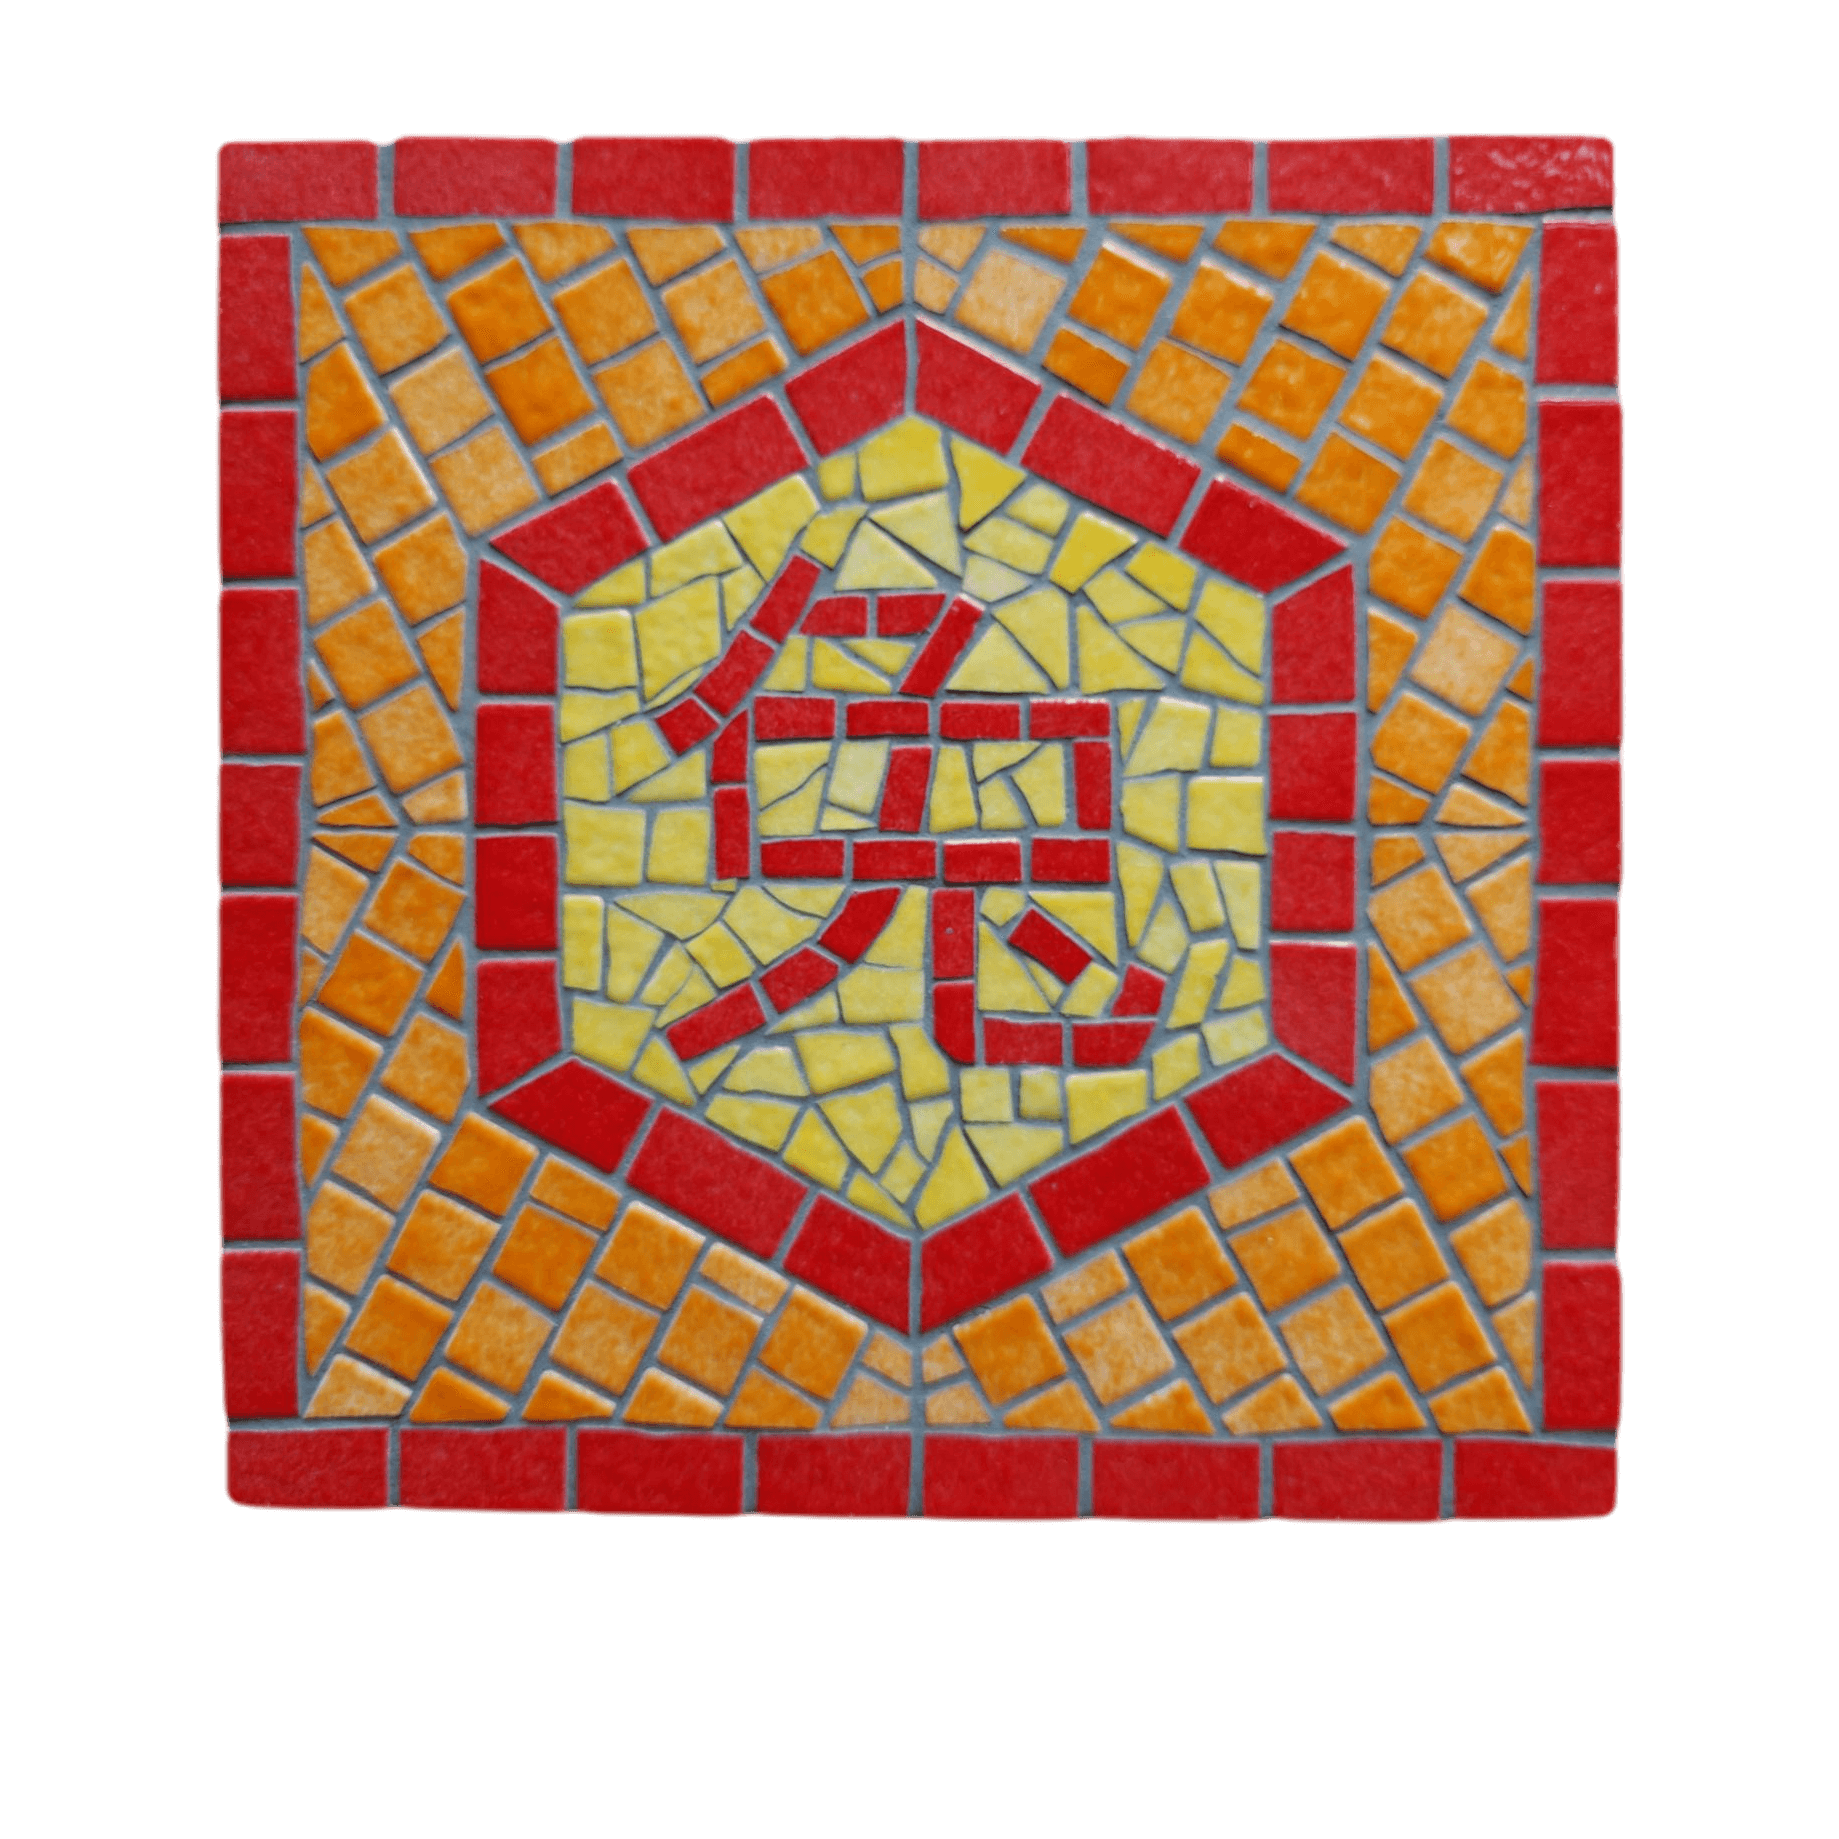 Artisanal Chinese zodiac mosaic, Rabbit sign, red line